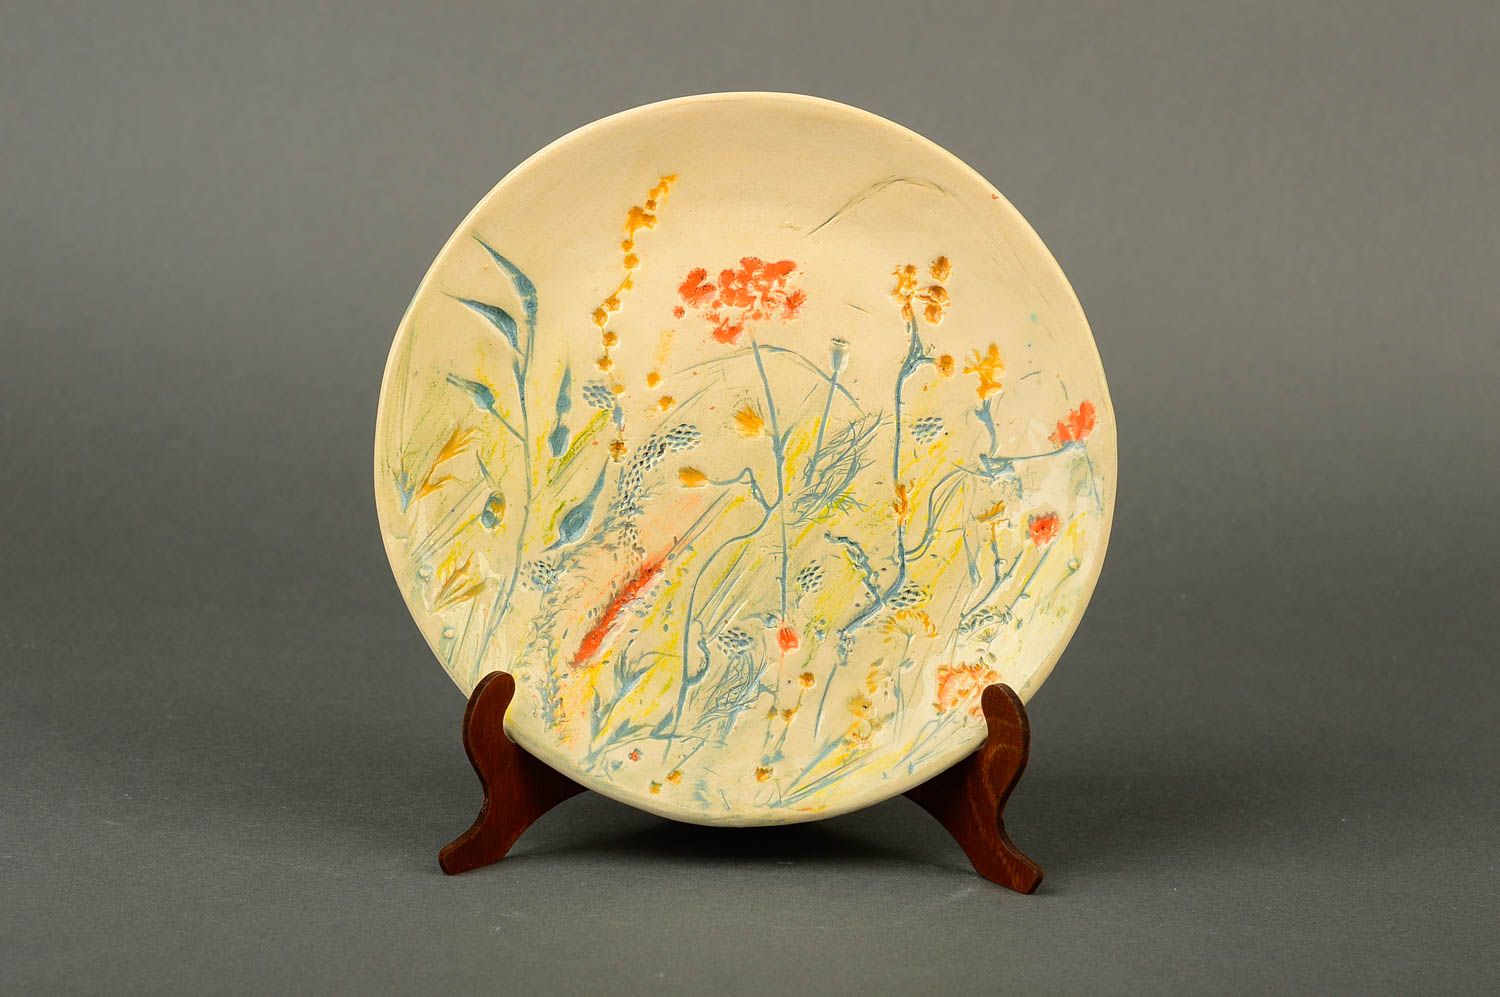 Beautiful handmade ceramic plate dishware ideas unusual kitchen supplies photo 1